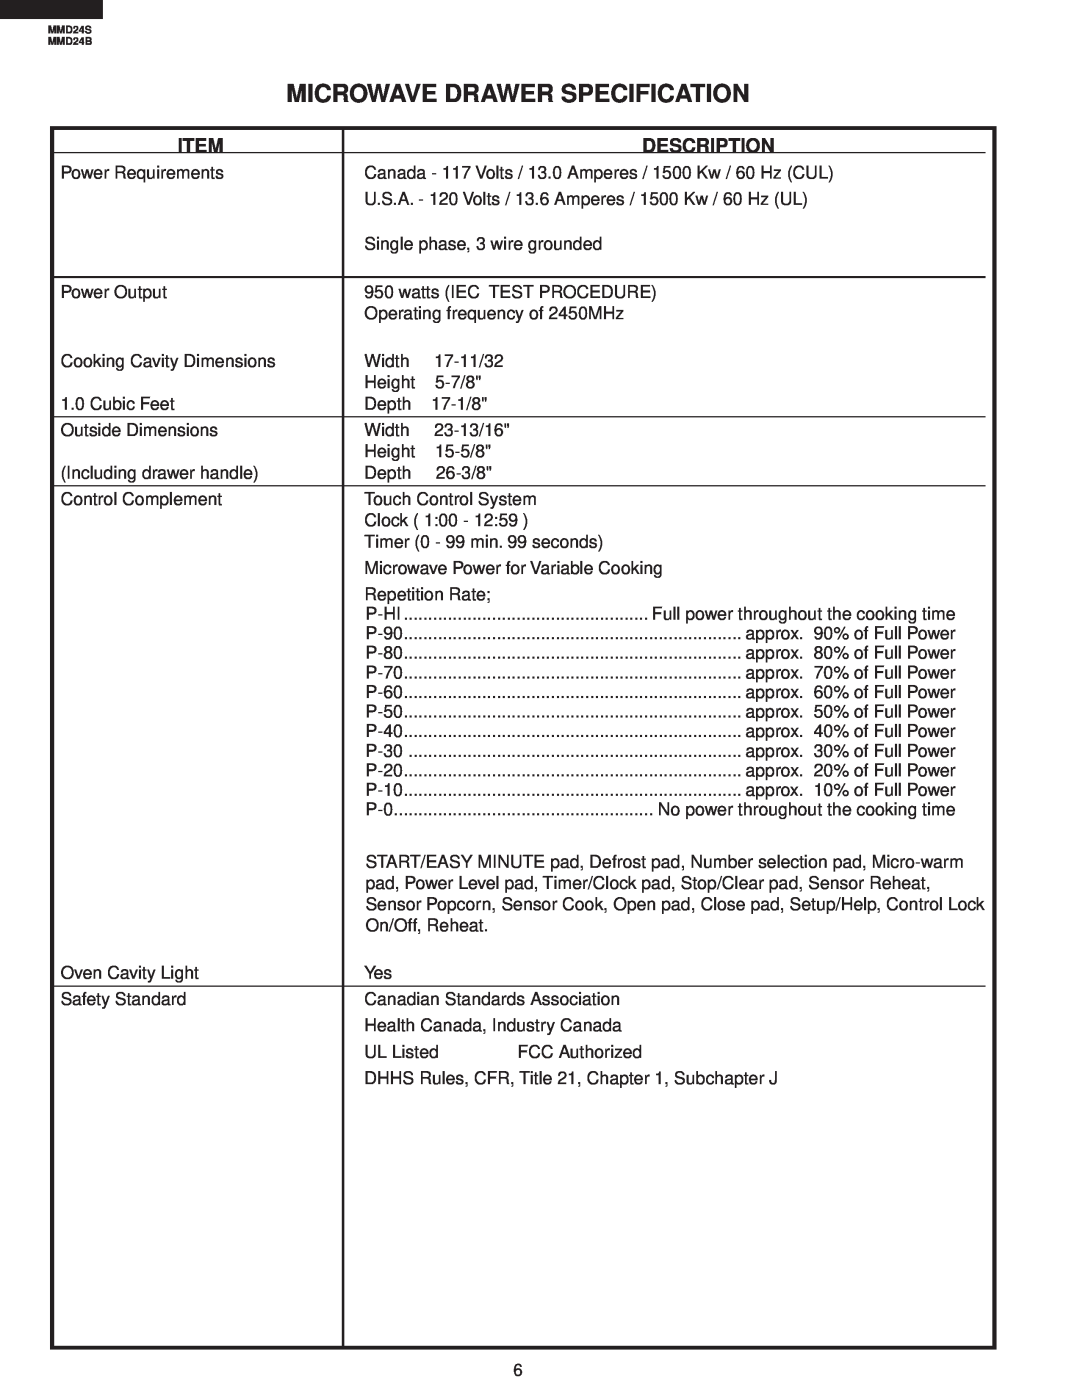 Sharp MMD24B, MMD24S manual Microwave Drawer Specification, Description 